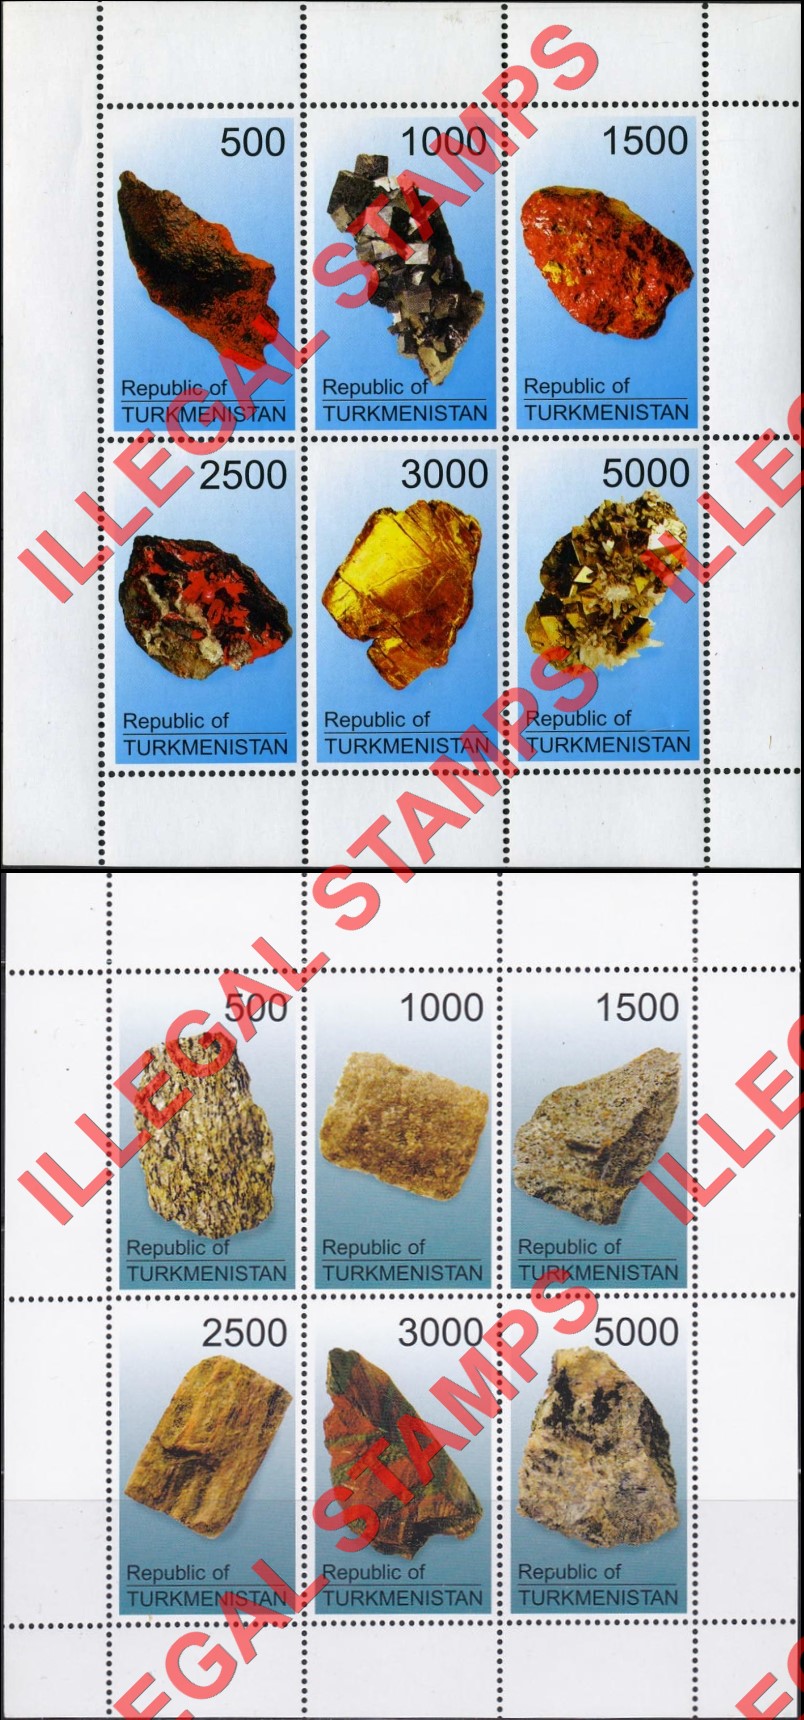 Turkmenistan 1998 Minerals Illegal Stamp Souvenir Sheet of 6